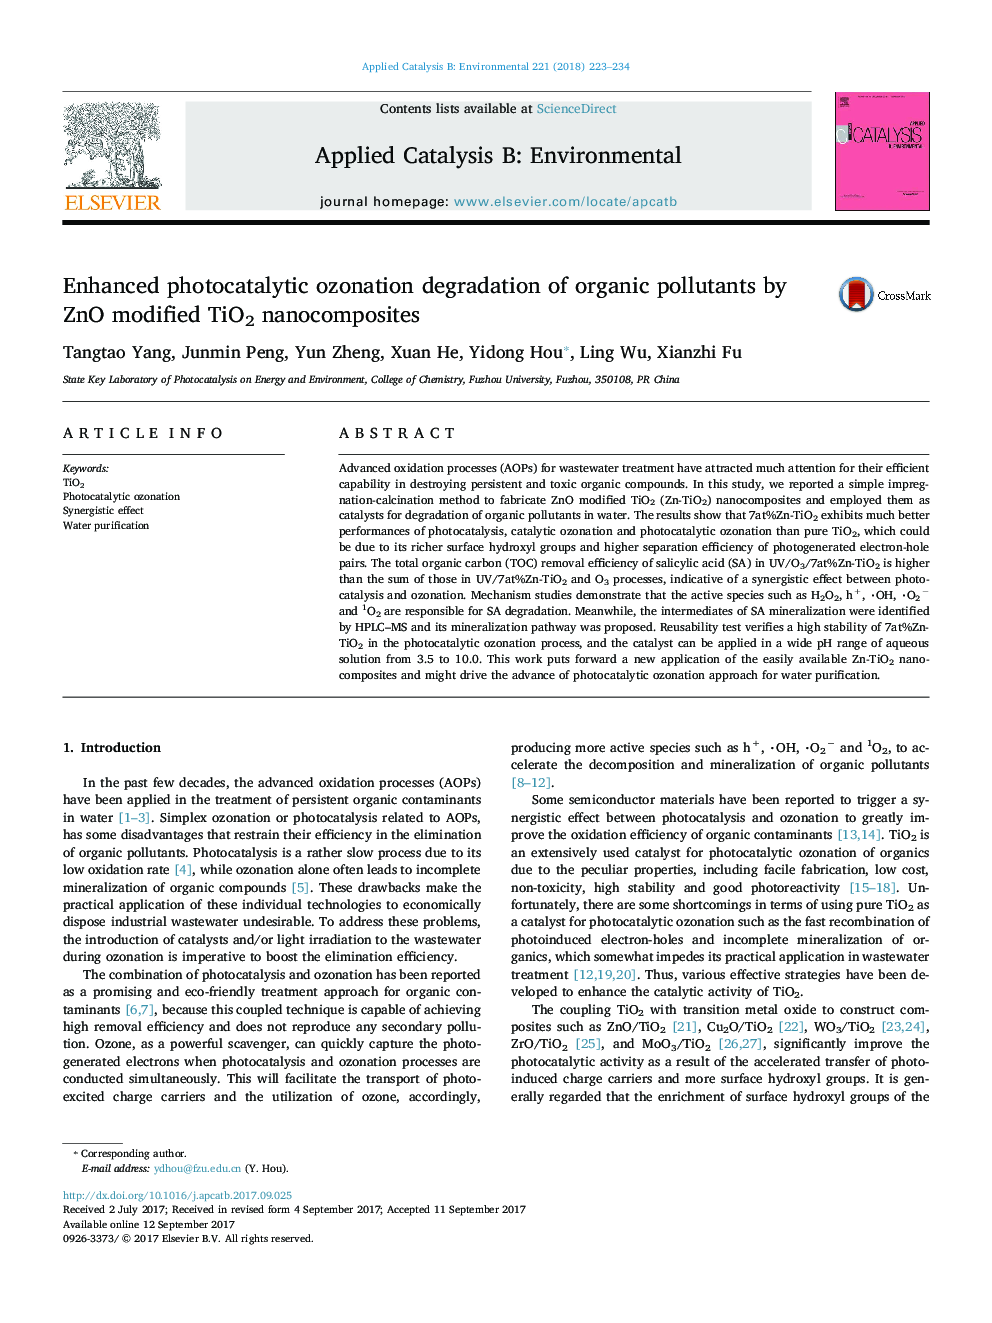 Enhanced photocatalytic ozonation degradation of organic pollutants by ZnO modified TiO2 nanocomposites